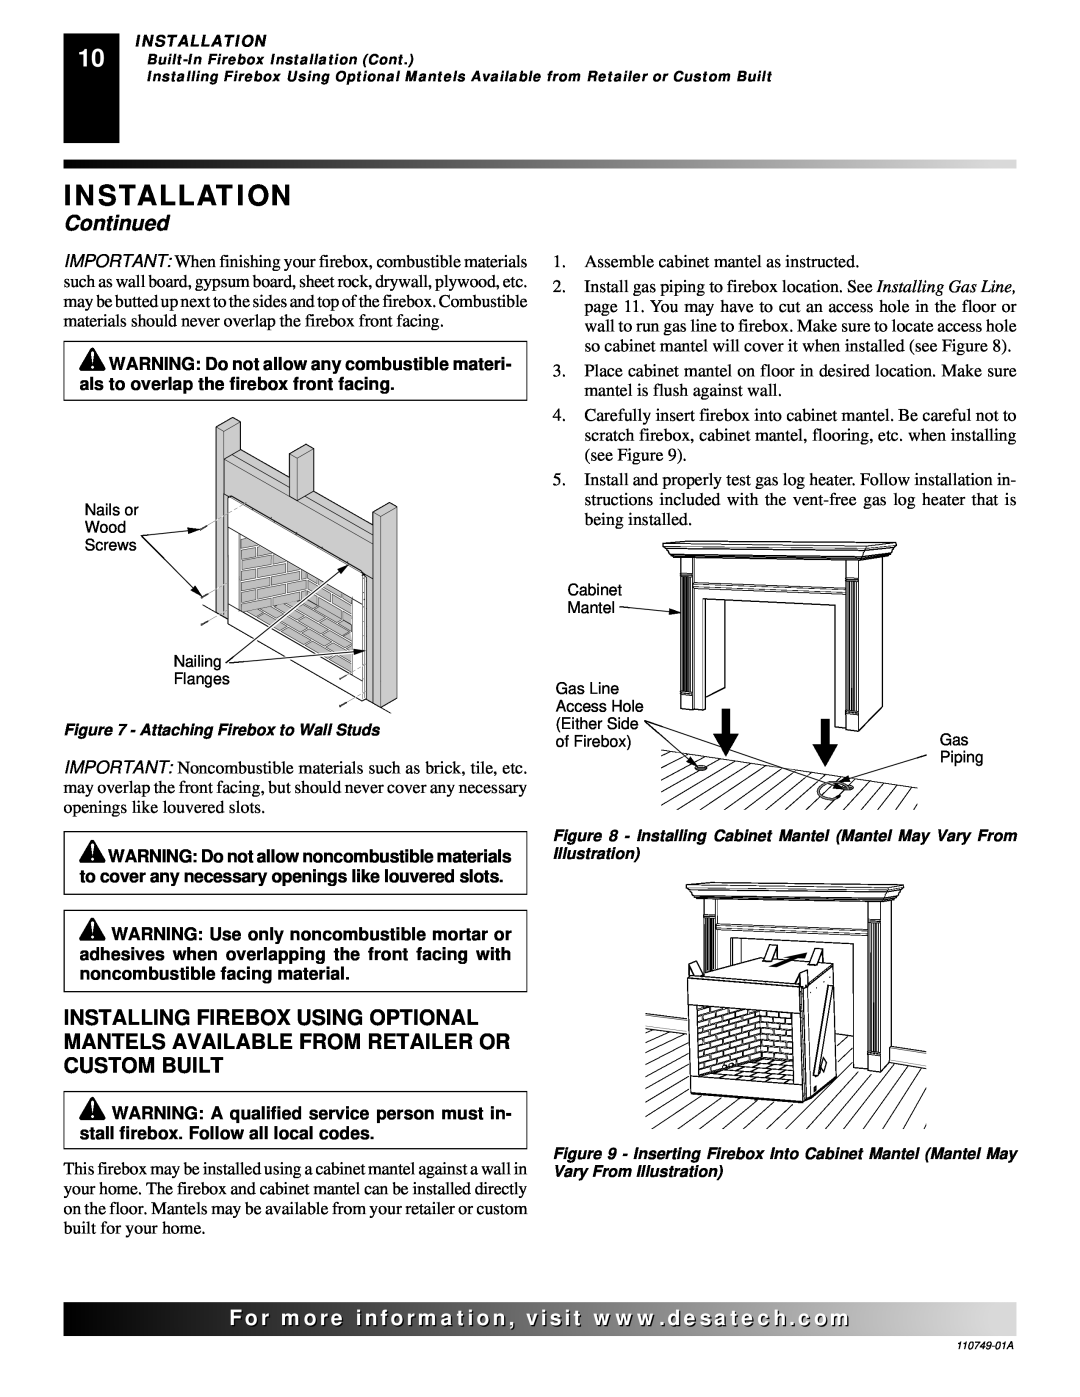 Desa VFB50NC, V50SH installation manual Installation, Continued, Assemble cabinet mantel as instructed 